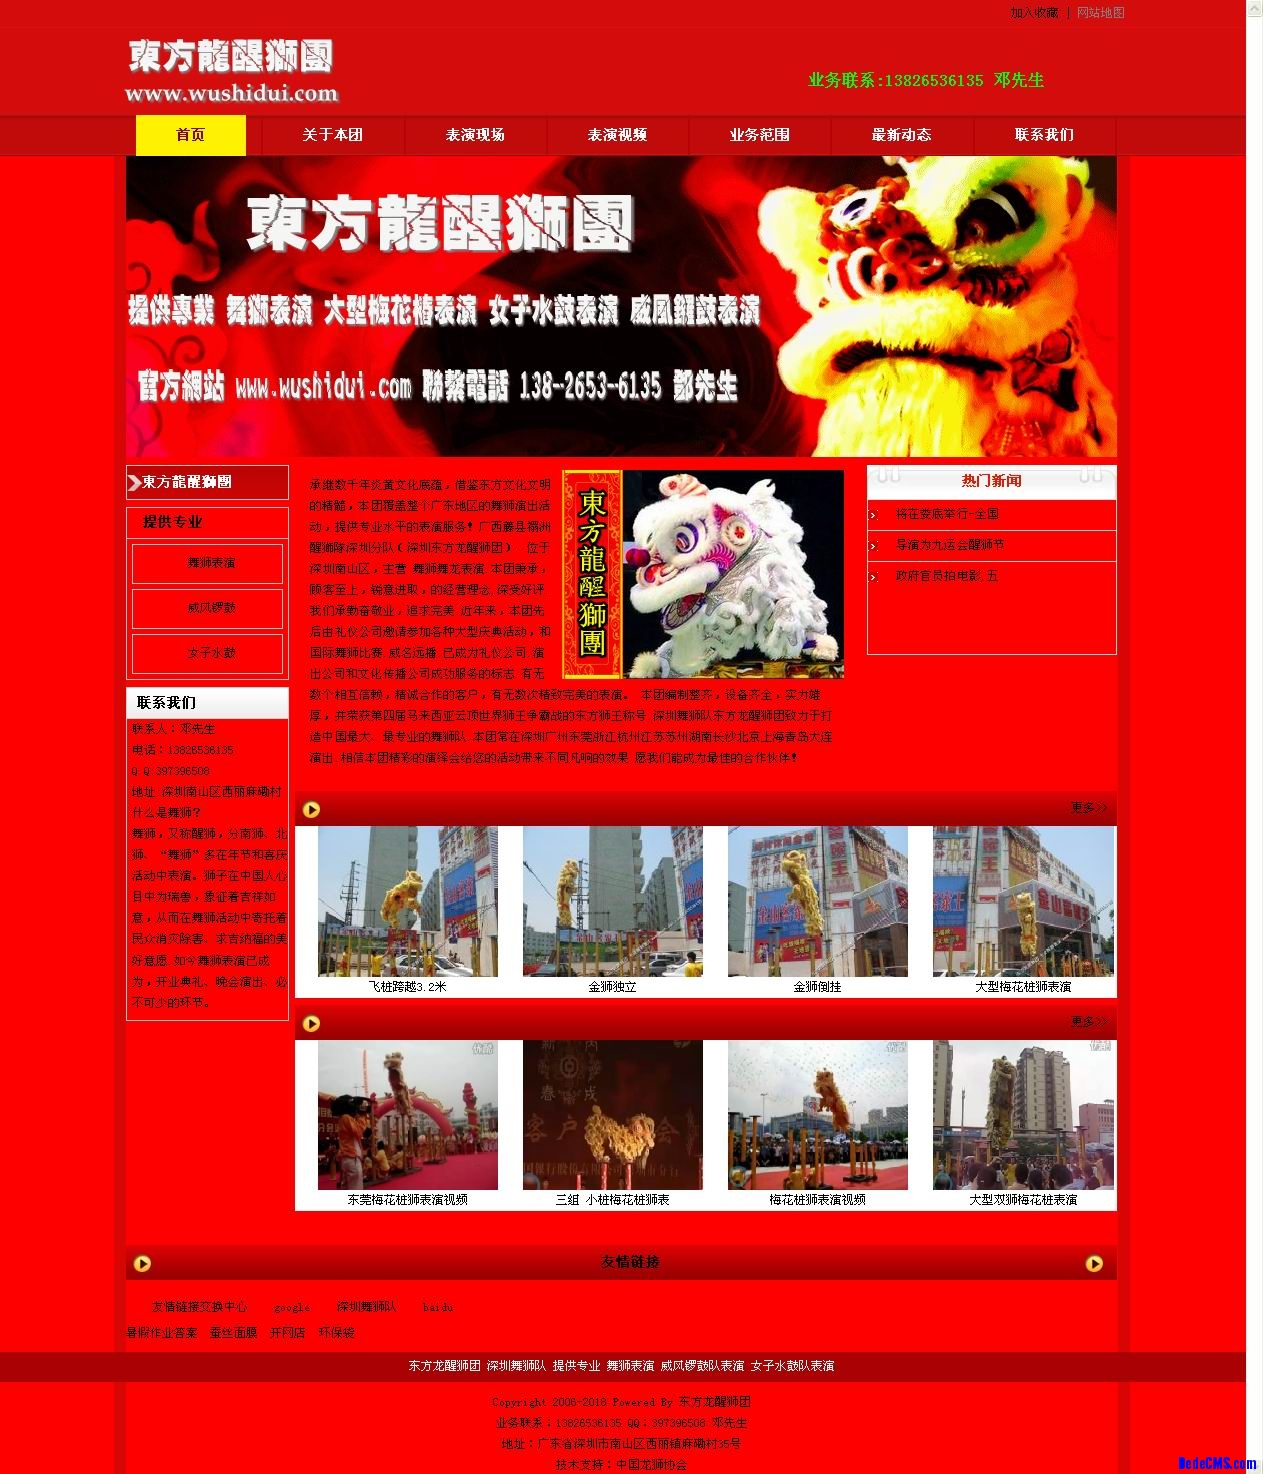 DedeCMS织梦企业站信息站模板_大气红色经典企业模板5.7gbk